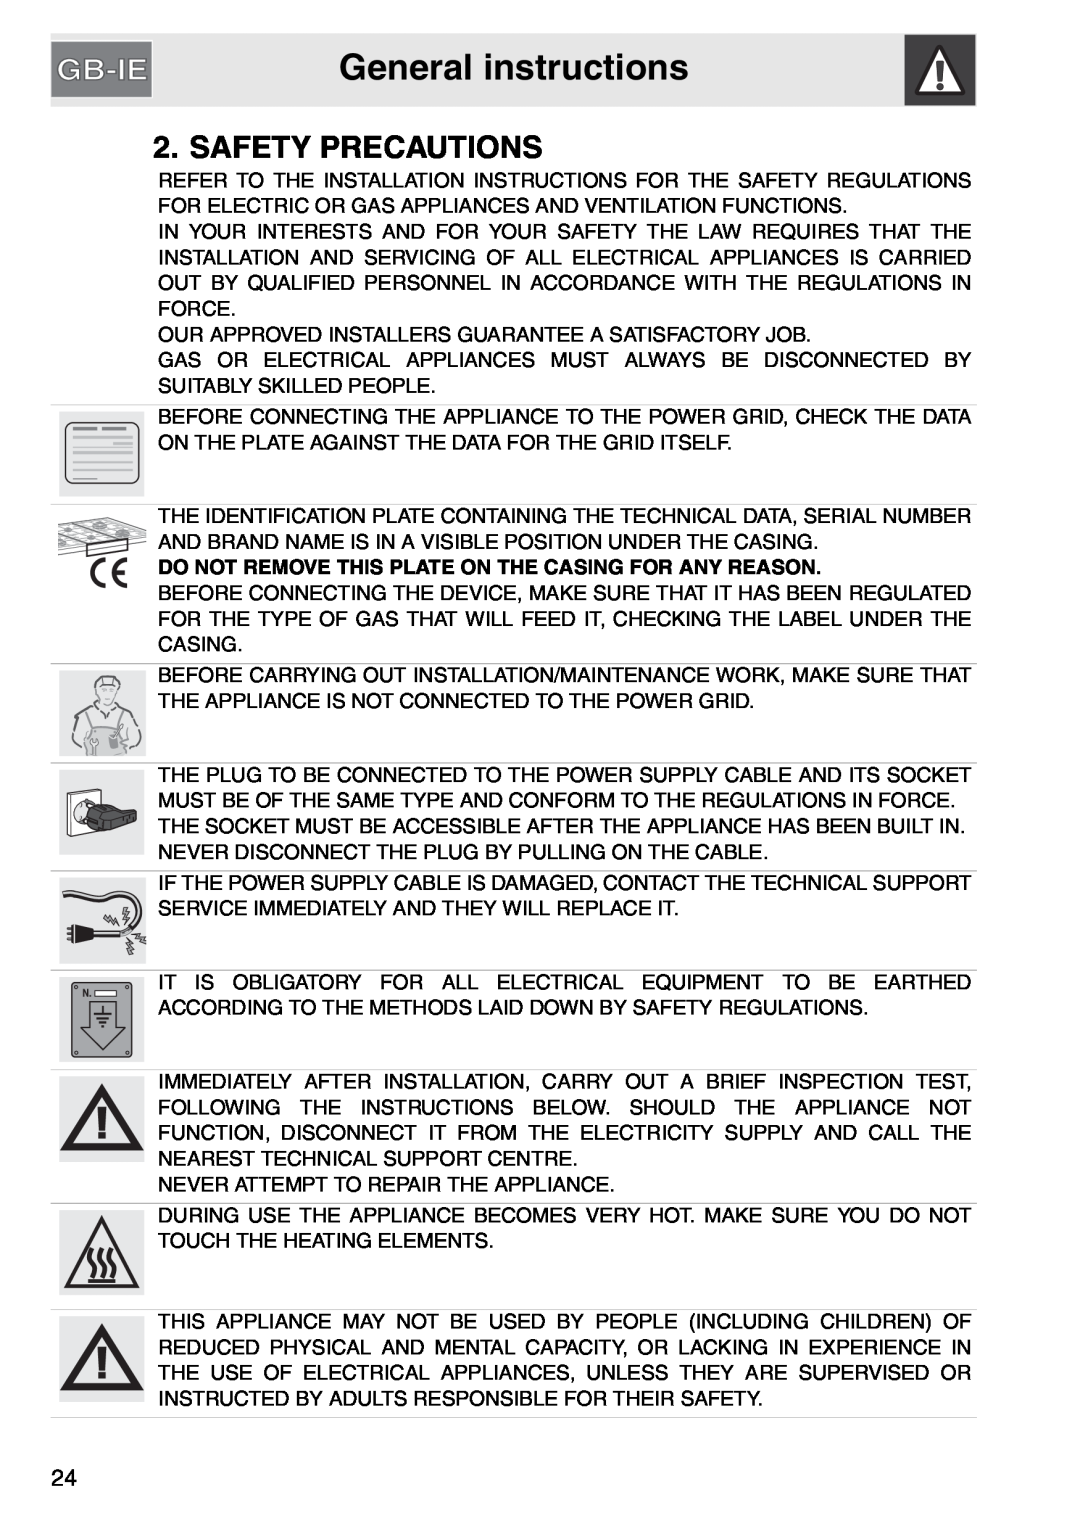 Smeg gas cooktop, PGA64 manual Safety Precautions, General instructions 